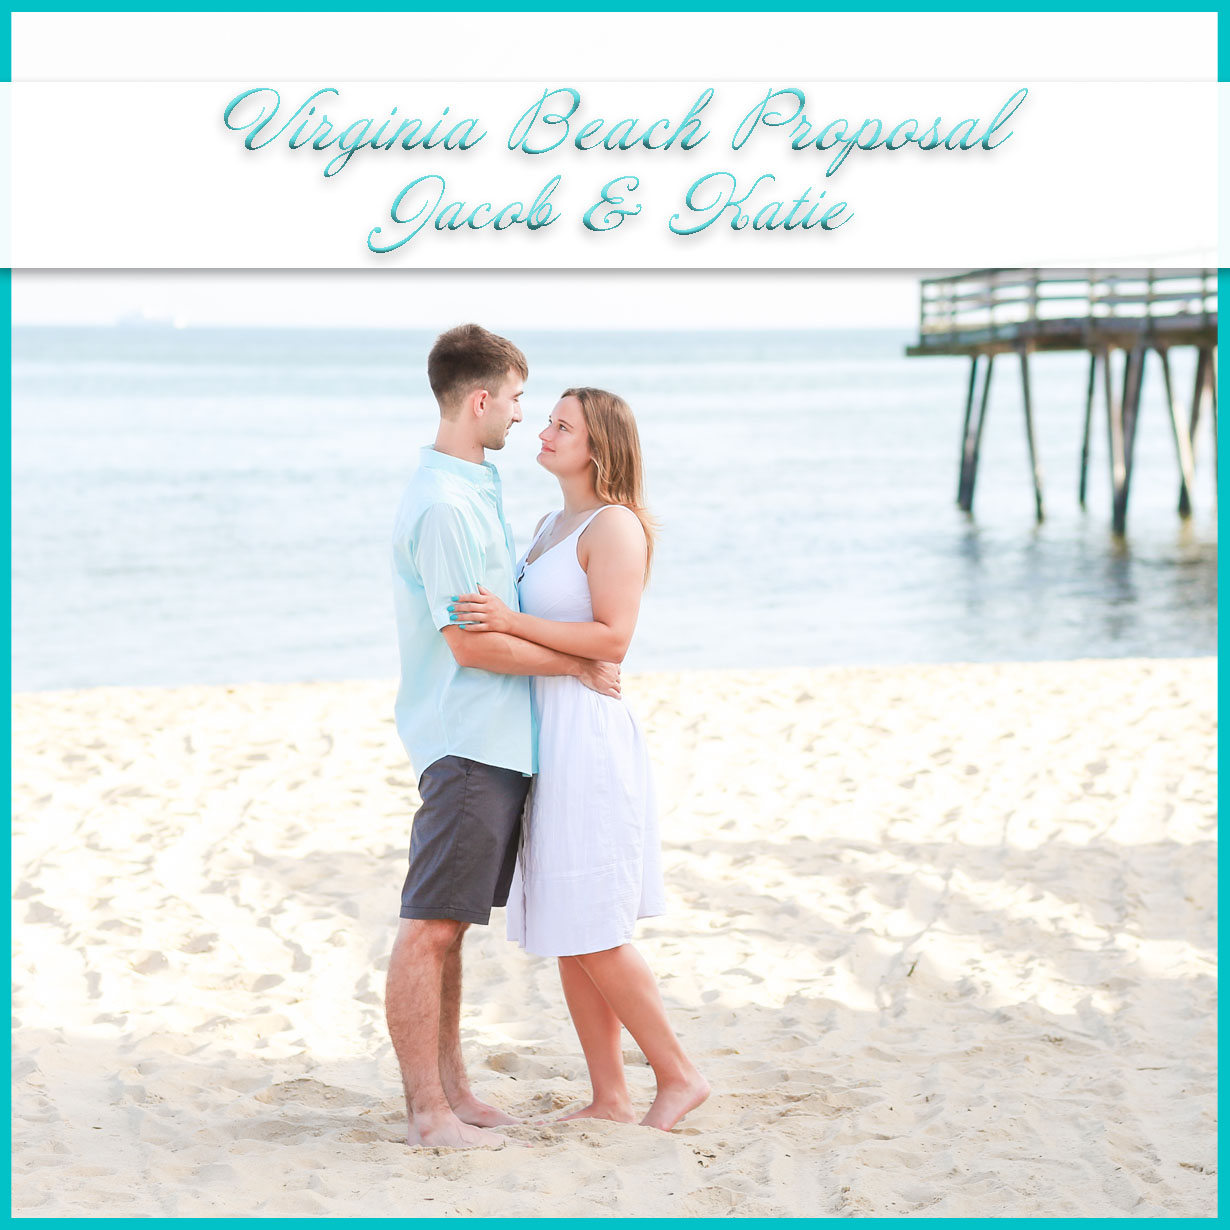 Virginia Beach Proposal